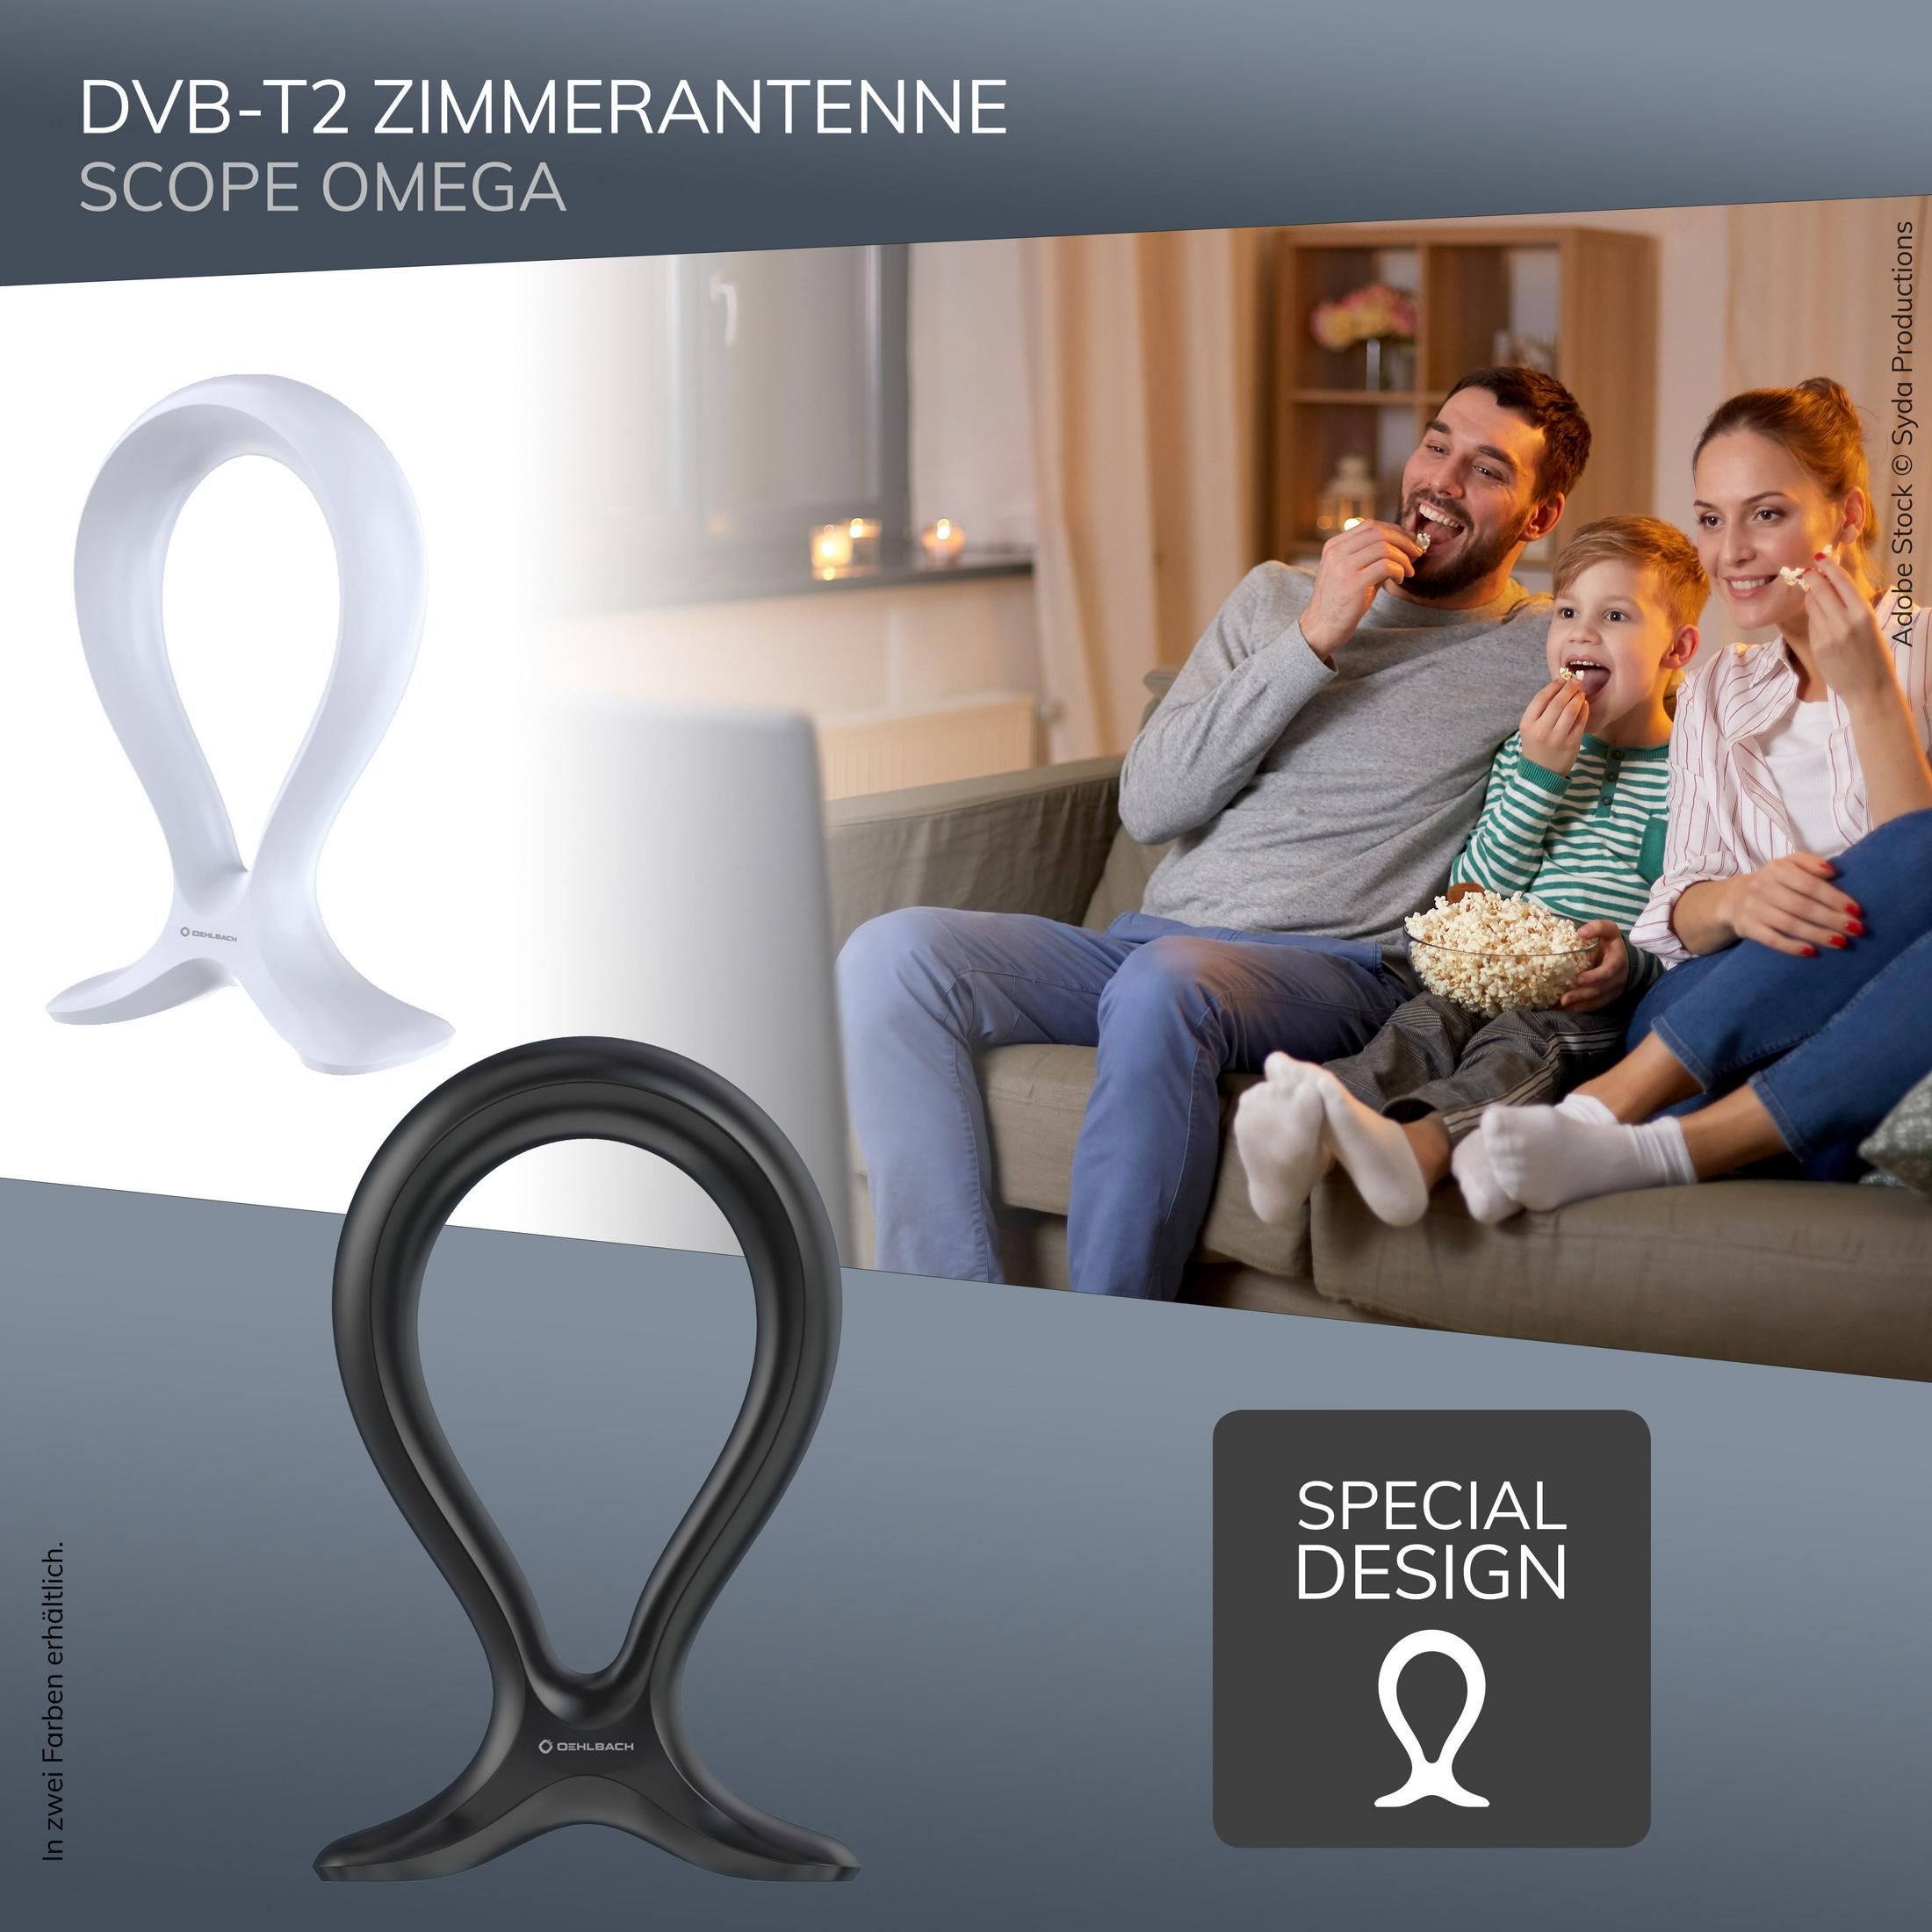 SCHWARZ SCOPE DVB-T2 OEHLBACH Zimmerantenne DVB-T2 ANTENNE HD OMEGA